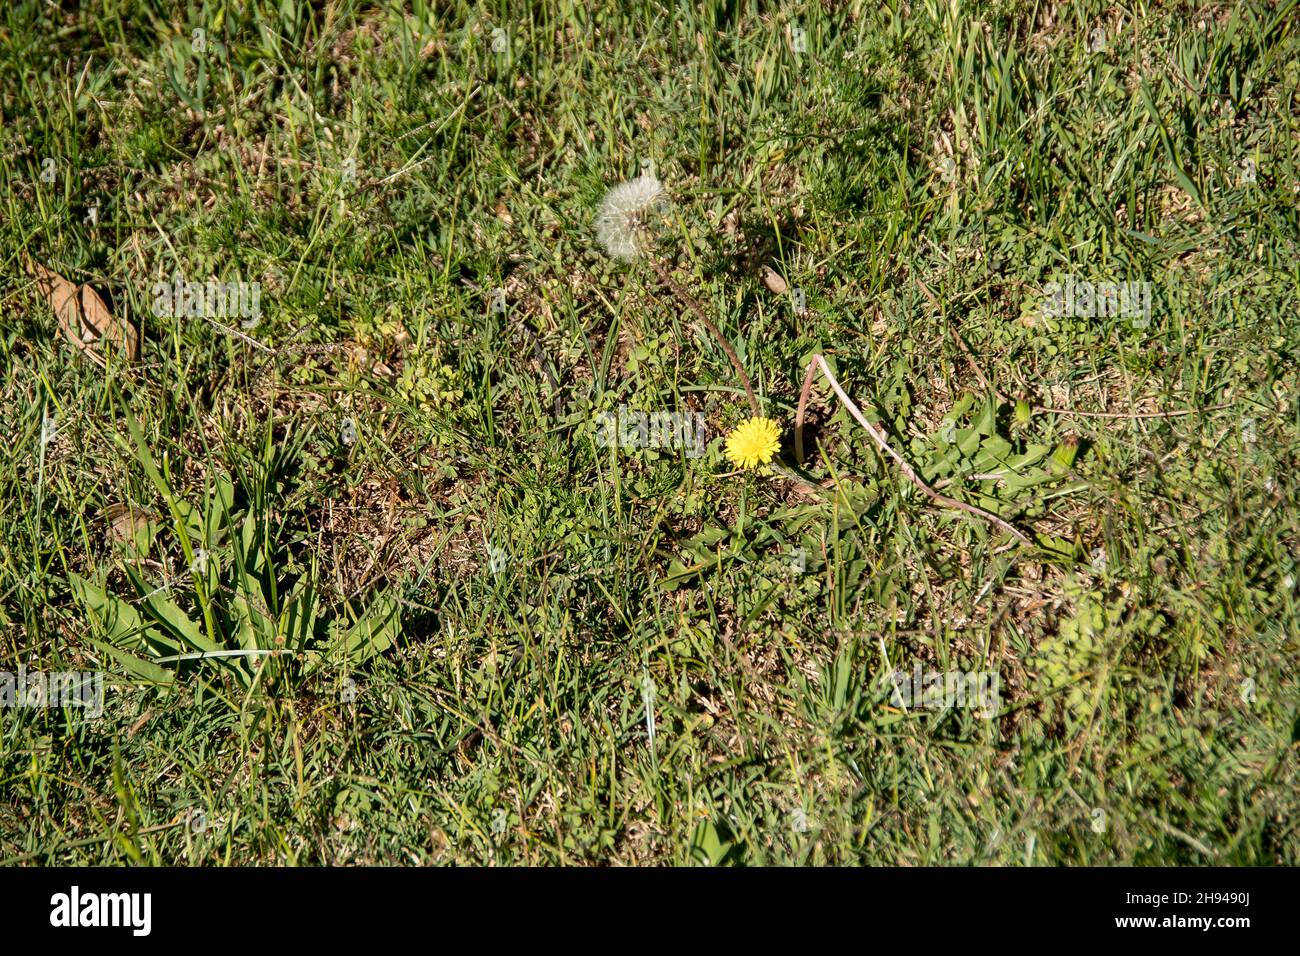 Leaves, yellow flower and seed head of Cat's ear weed ,Hypochaeris radicata, flatweed,  Queensland, Australia. Prolific weed similar to dandelion. Stock Photo